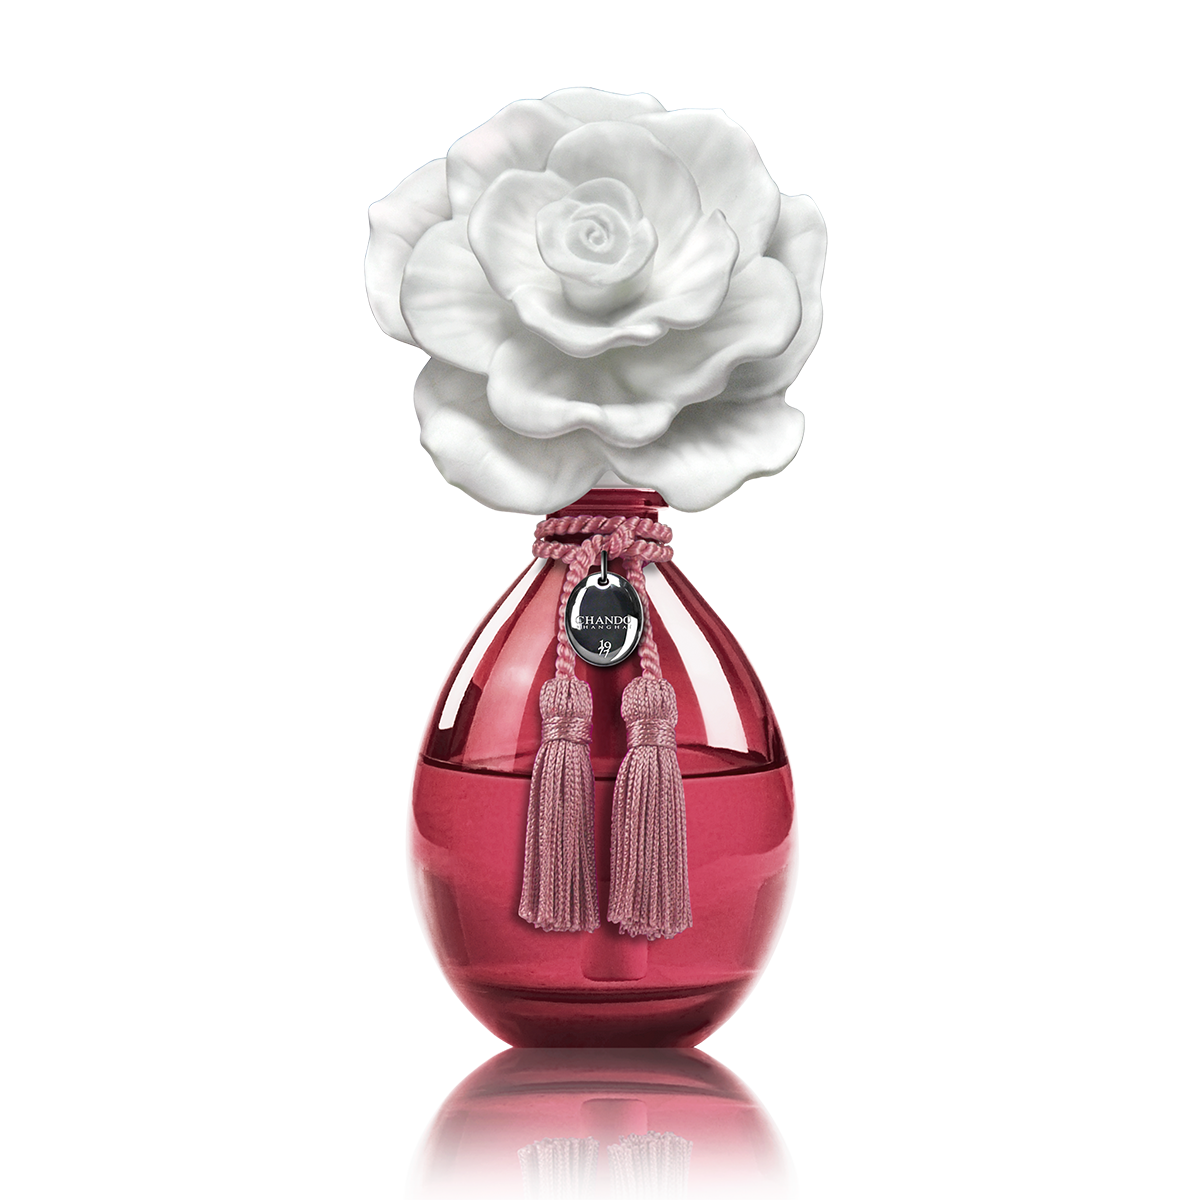 Eternal Love Diffuser with Rose Garden Fragrance - Chando UK